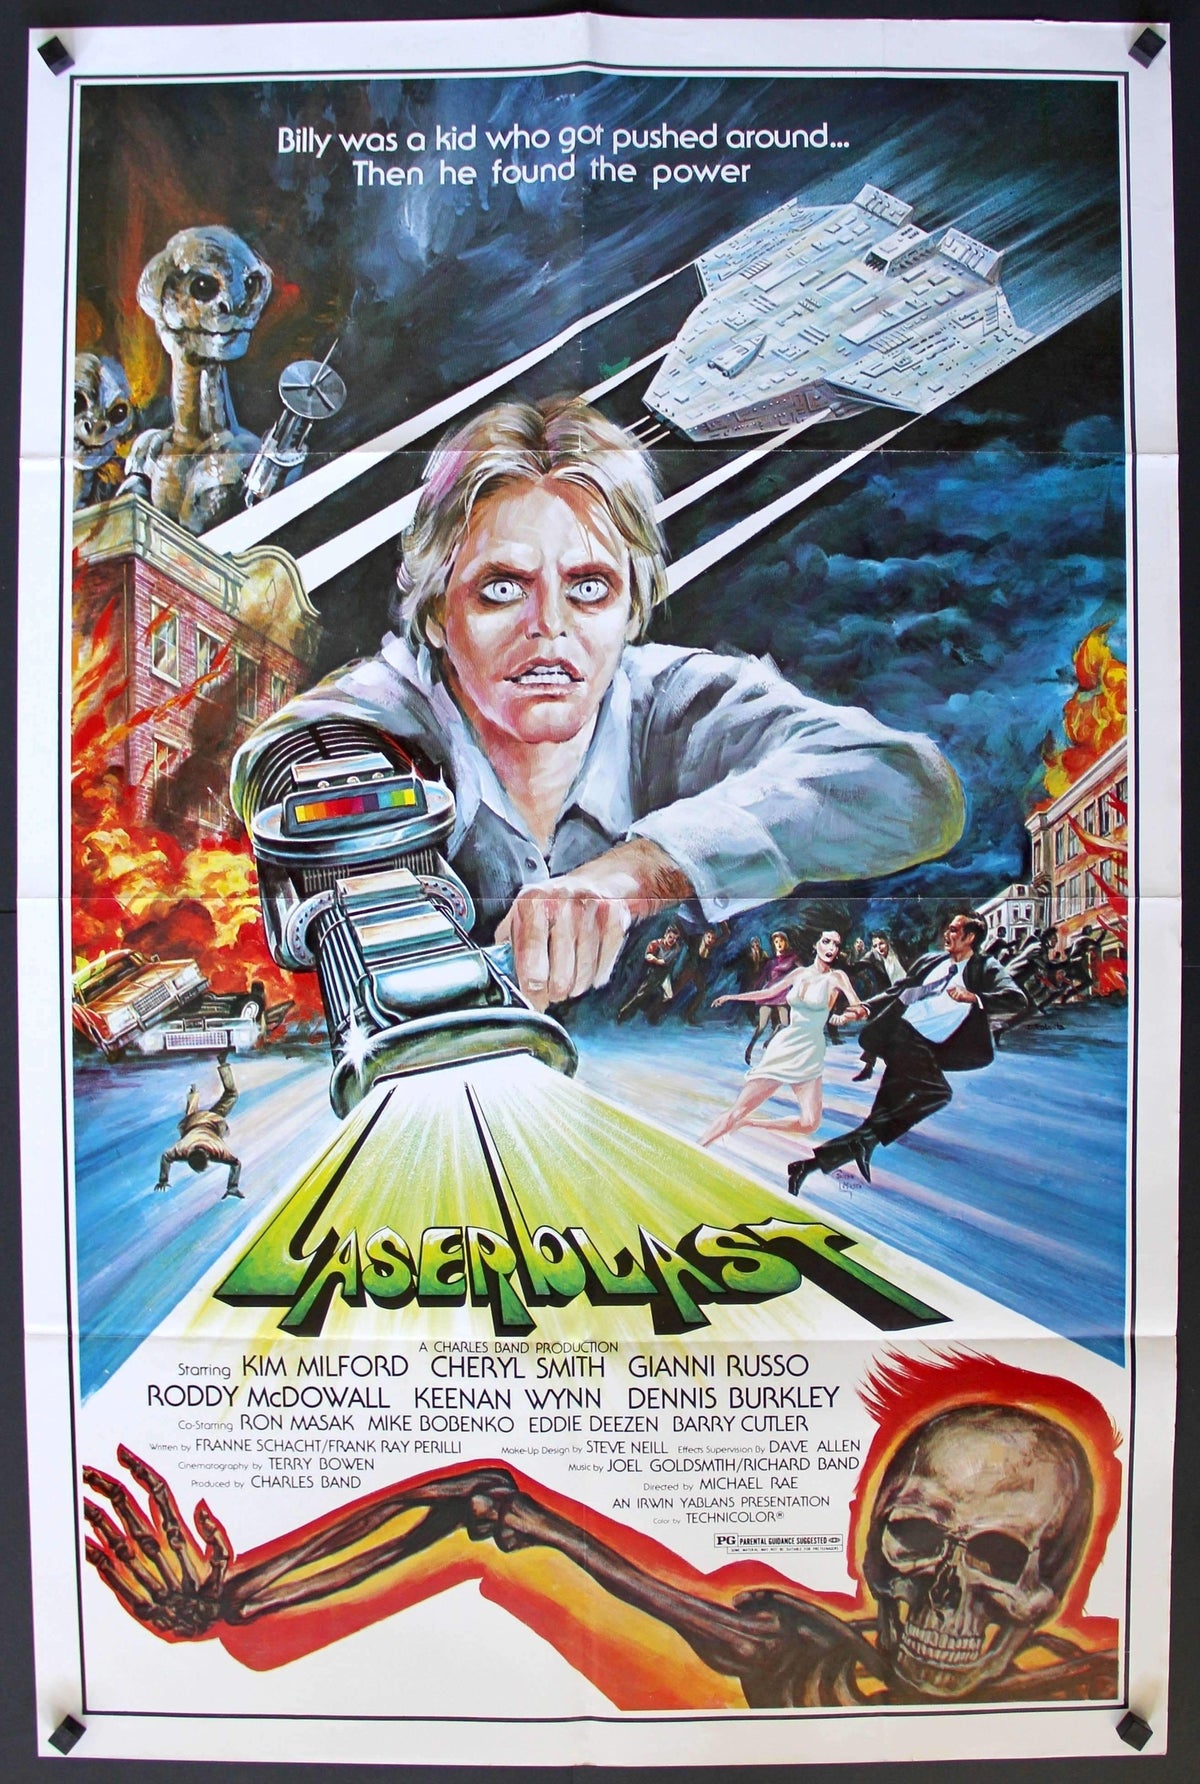 Laserblast (1978) original movie poster for sale at Original Film Art